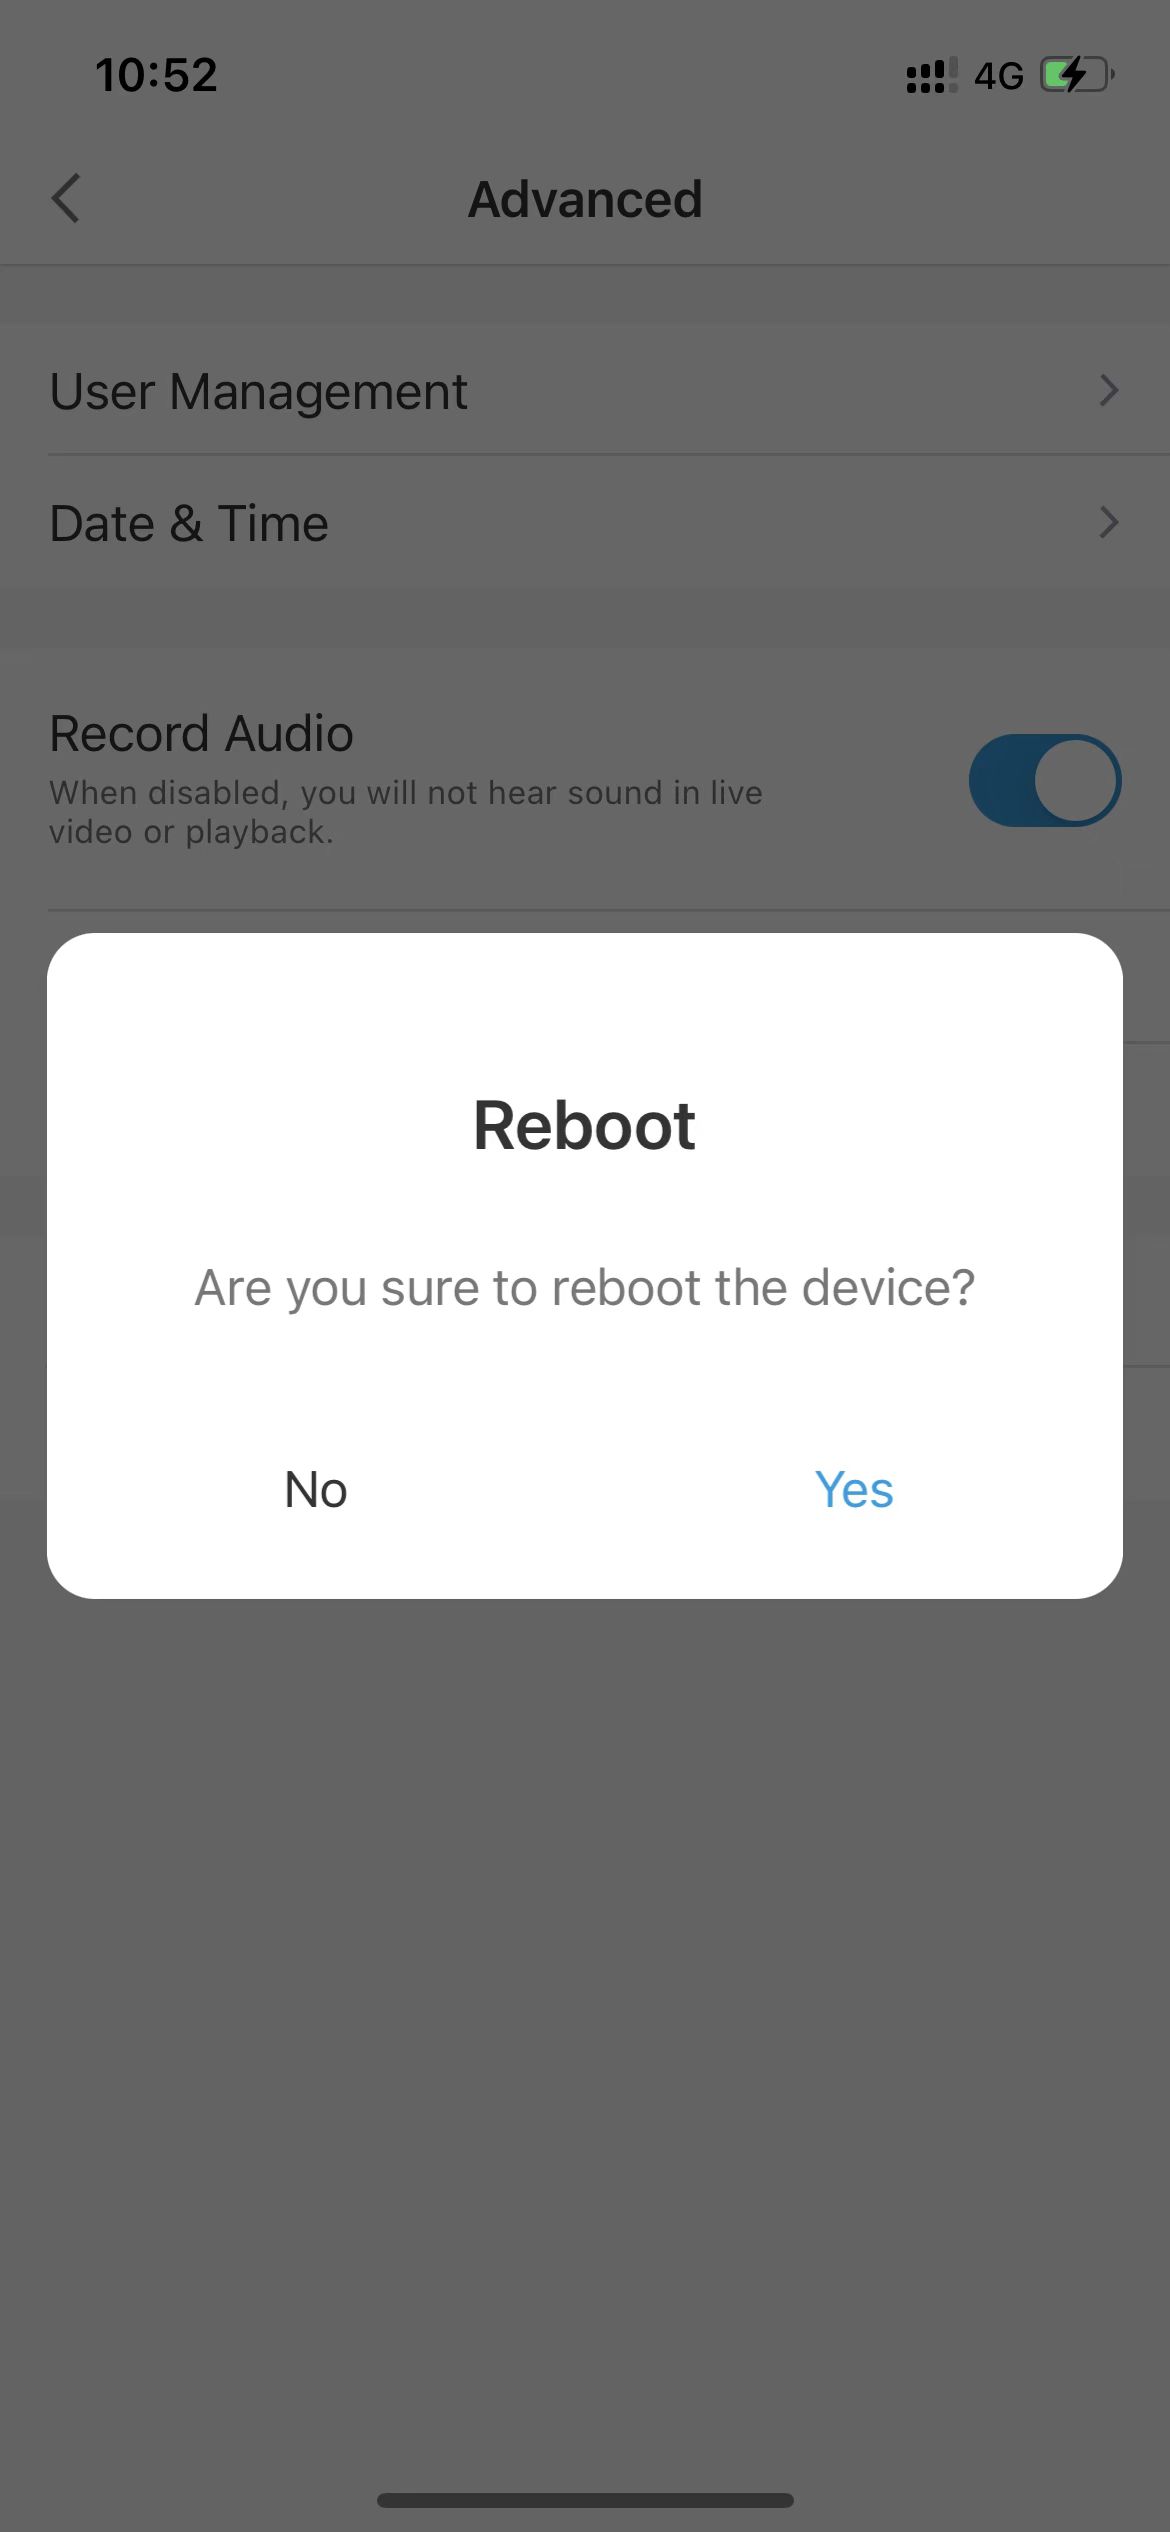 Yes_for_reboot.jpg